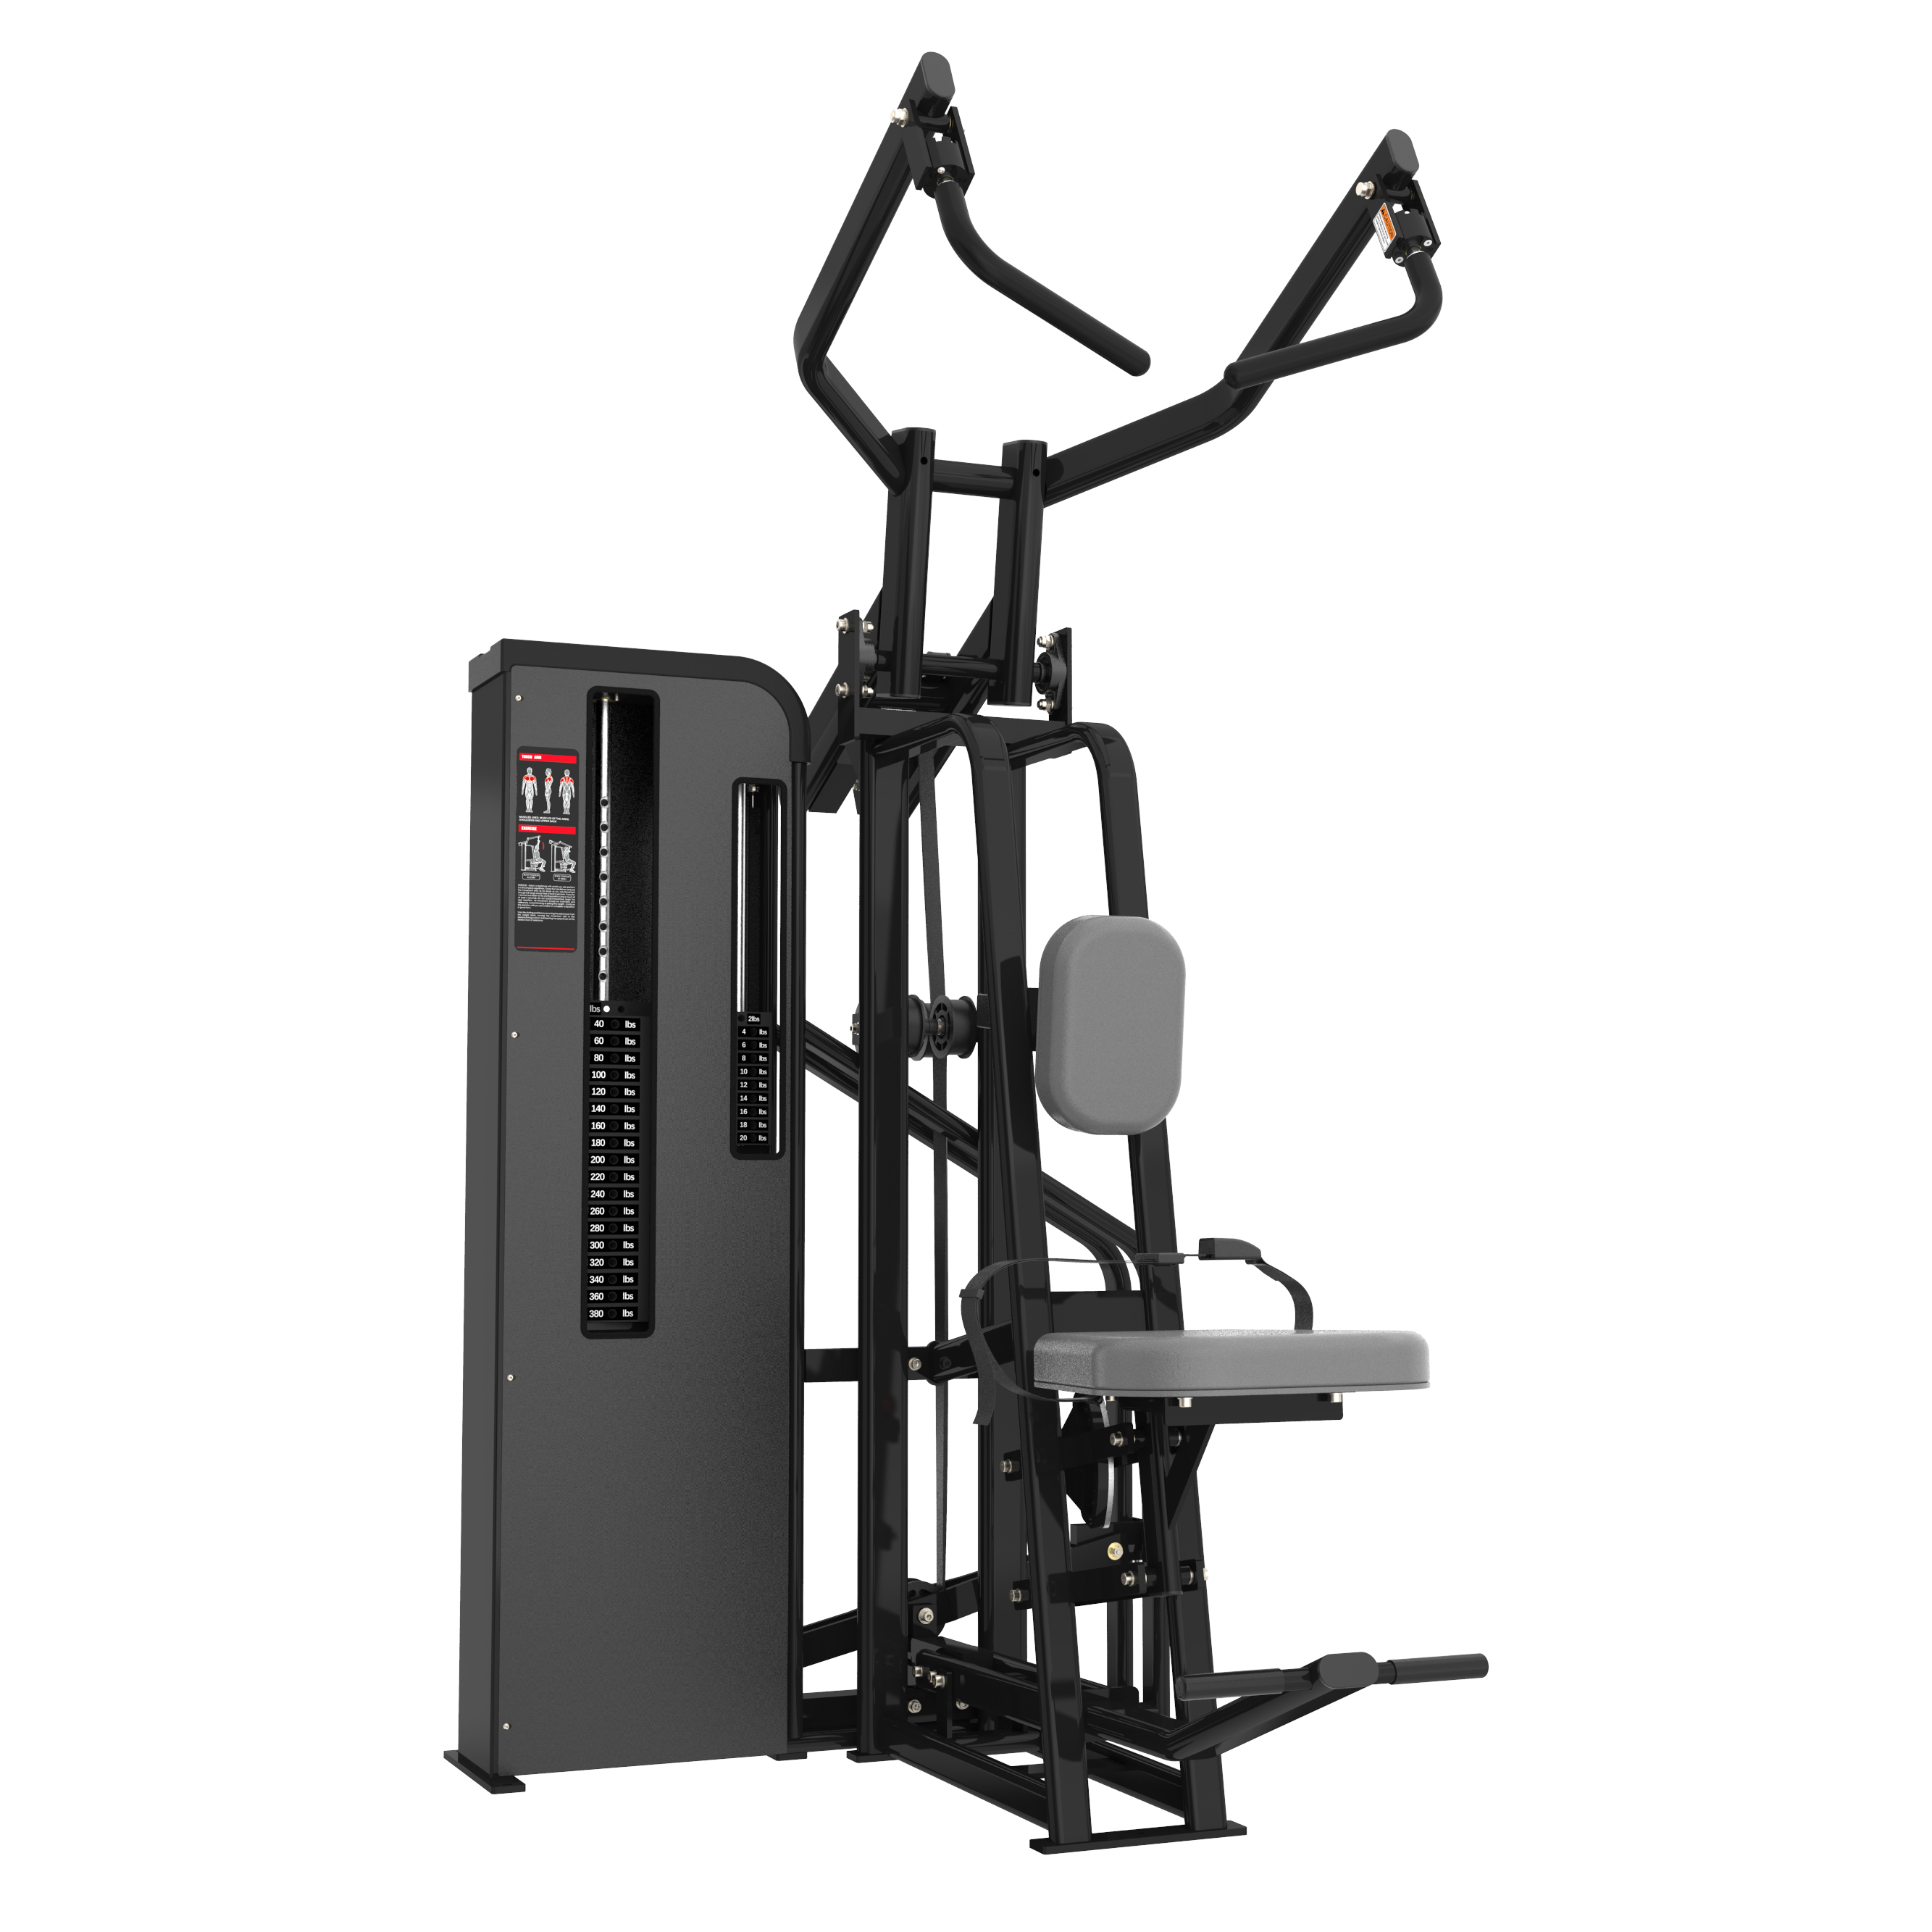 TORSO ARM,home-gym.commerical strength fitness equipment,Selectorized Strength Machine,Triumph Fitness LLC